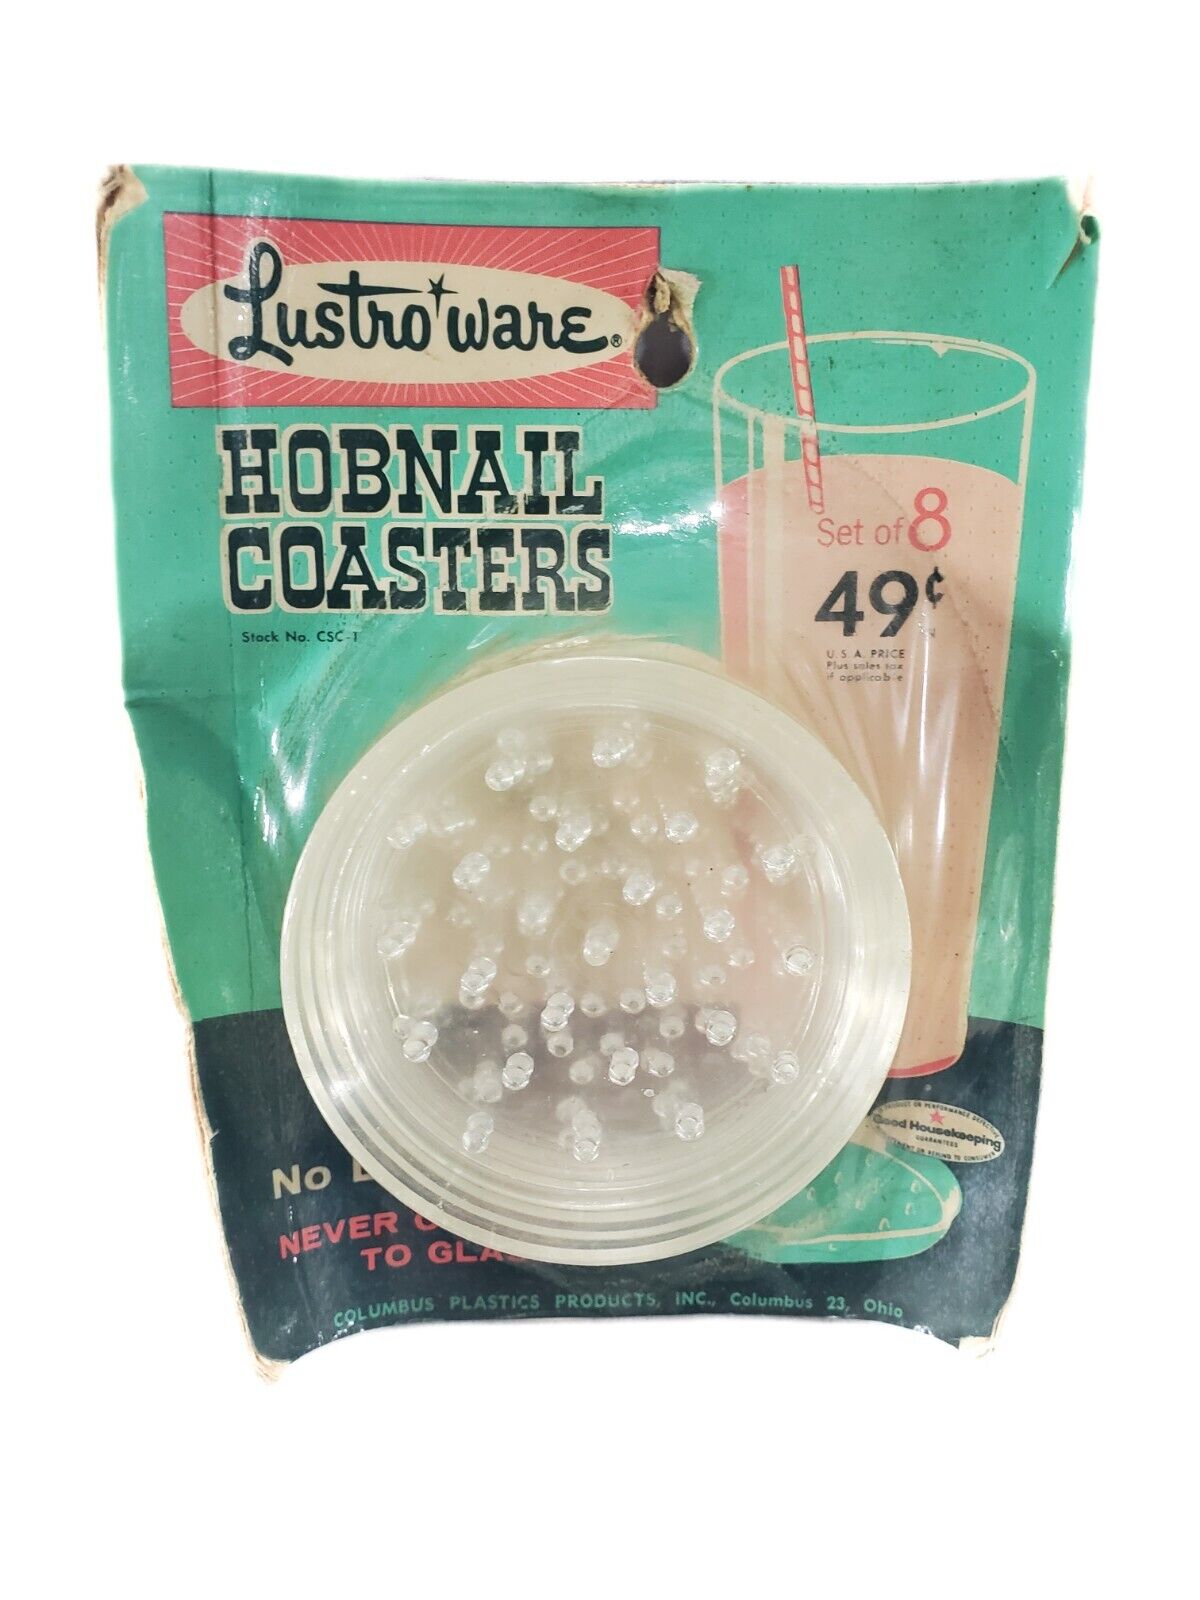 NIB VTG Vintage Lustro Ware Hobnail Coasters -Original Package Set of 8 Plastic